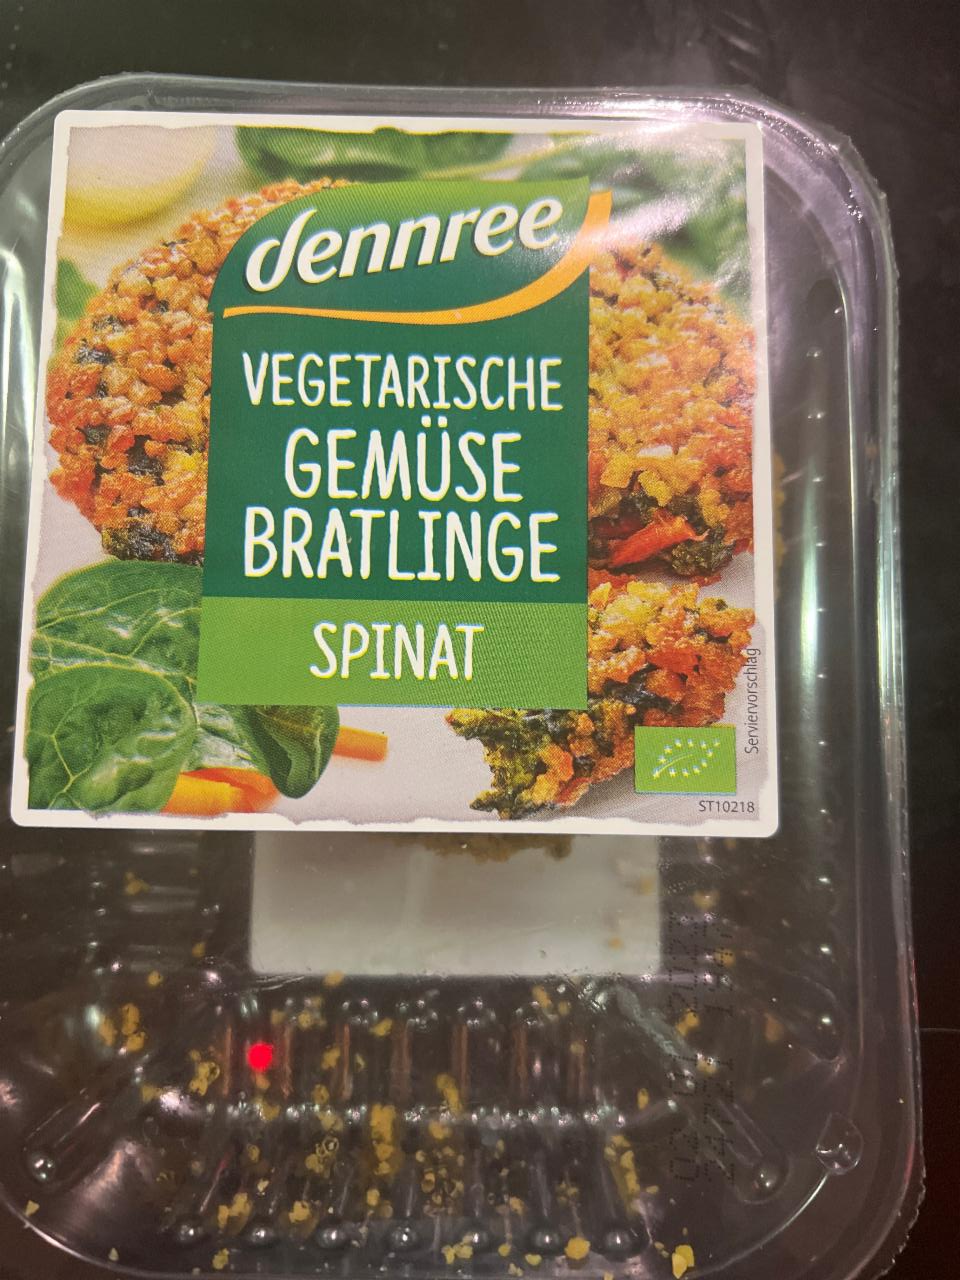 Fotografie - vegetarische Gemüse bratlinge Spinat dennree